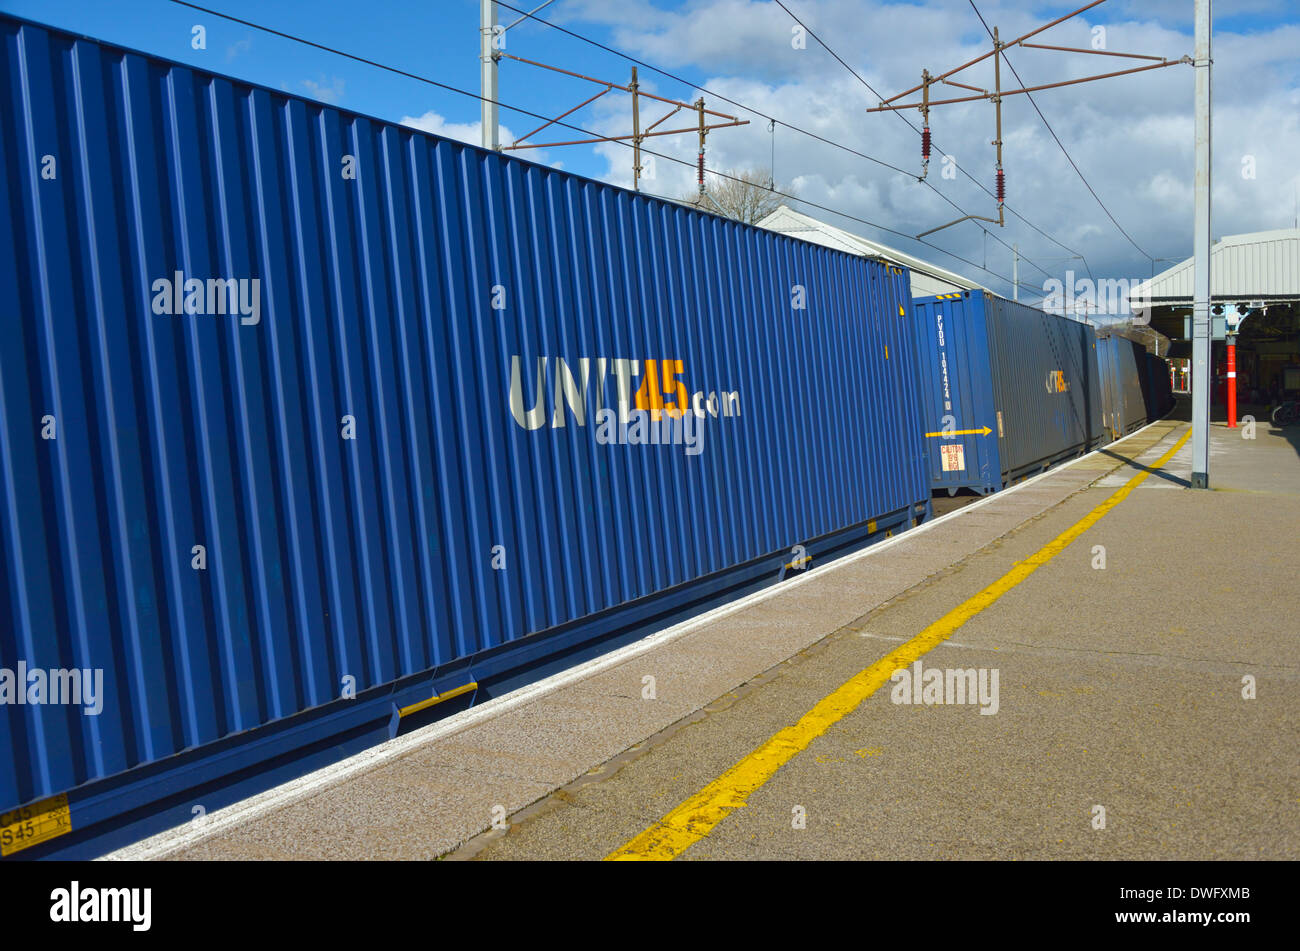 UNIT45.com. Rail freight containers. Oxenholme Rail Station, West Coast Main Line, Cumbria, England United Kingdom, Europe. Stock Photo